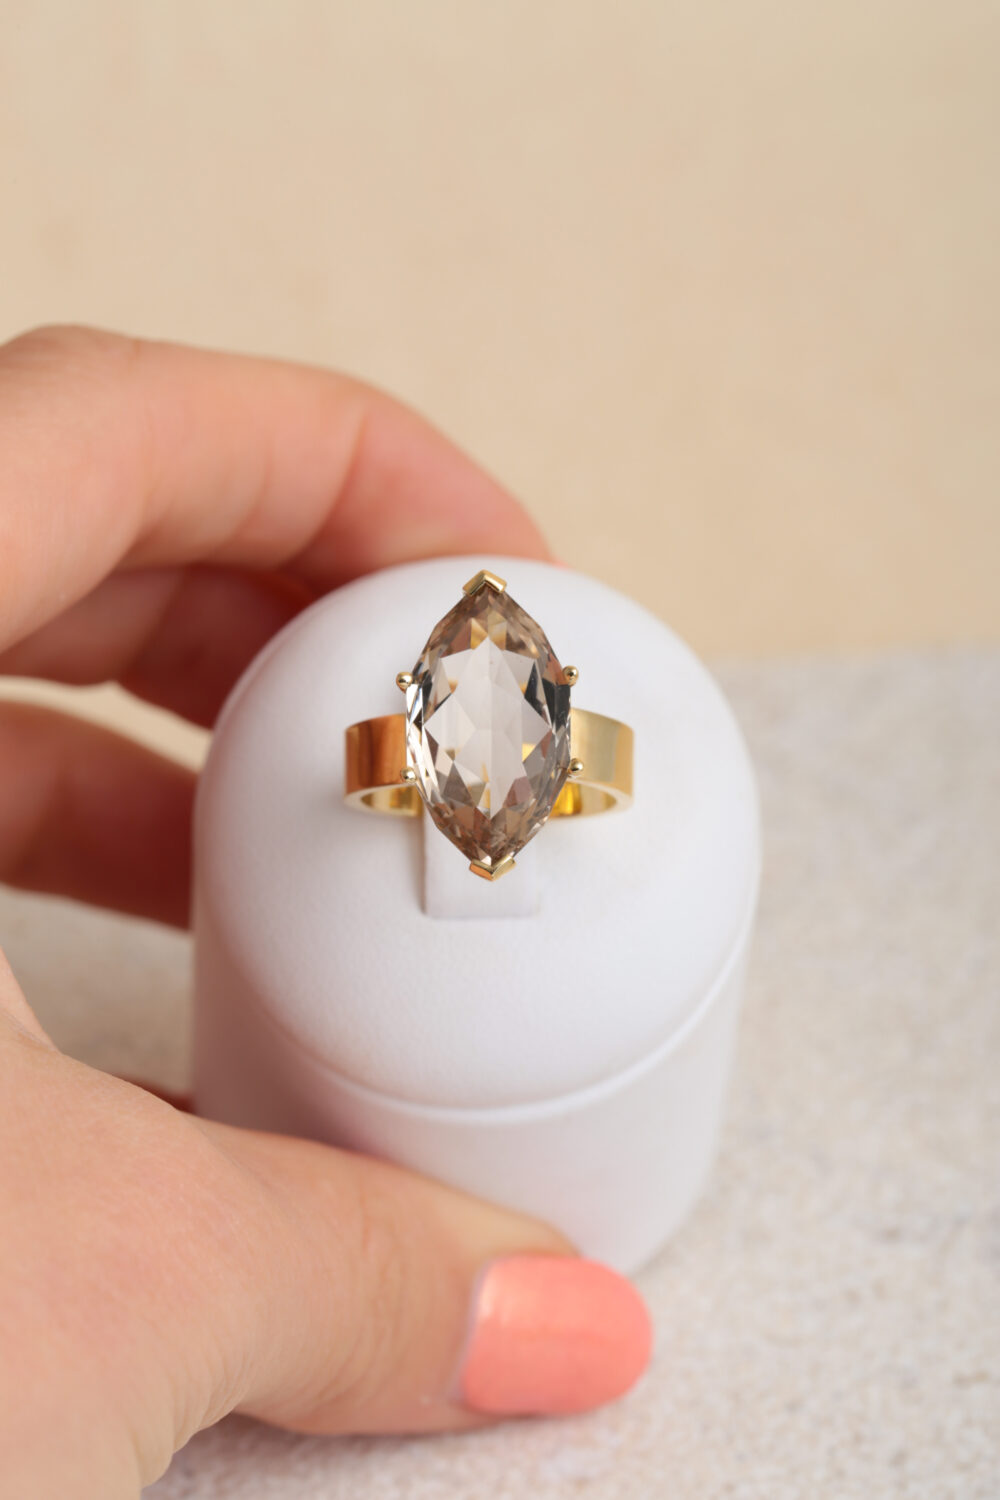 18-karat yellow gold ring set with a marquise-cut smoky quartz gemstone.